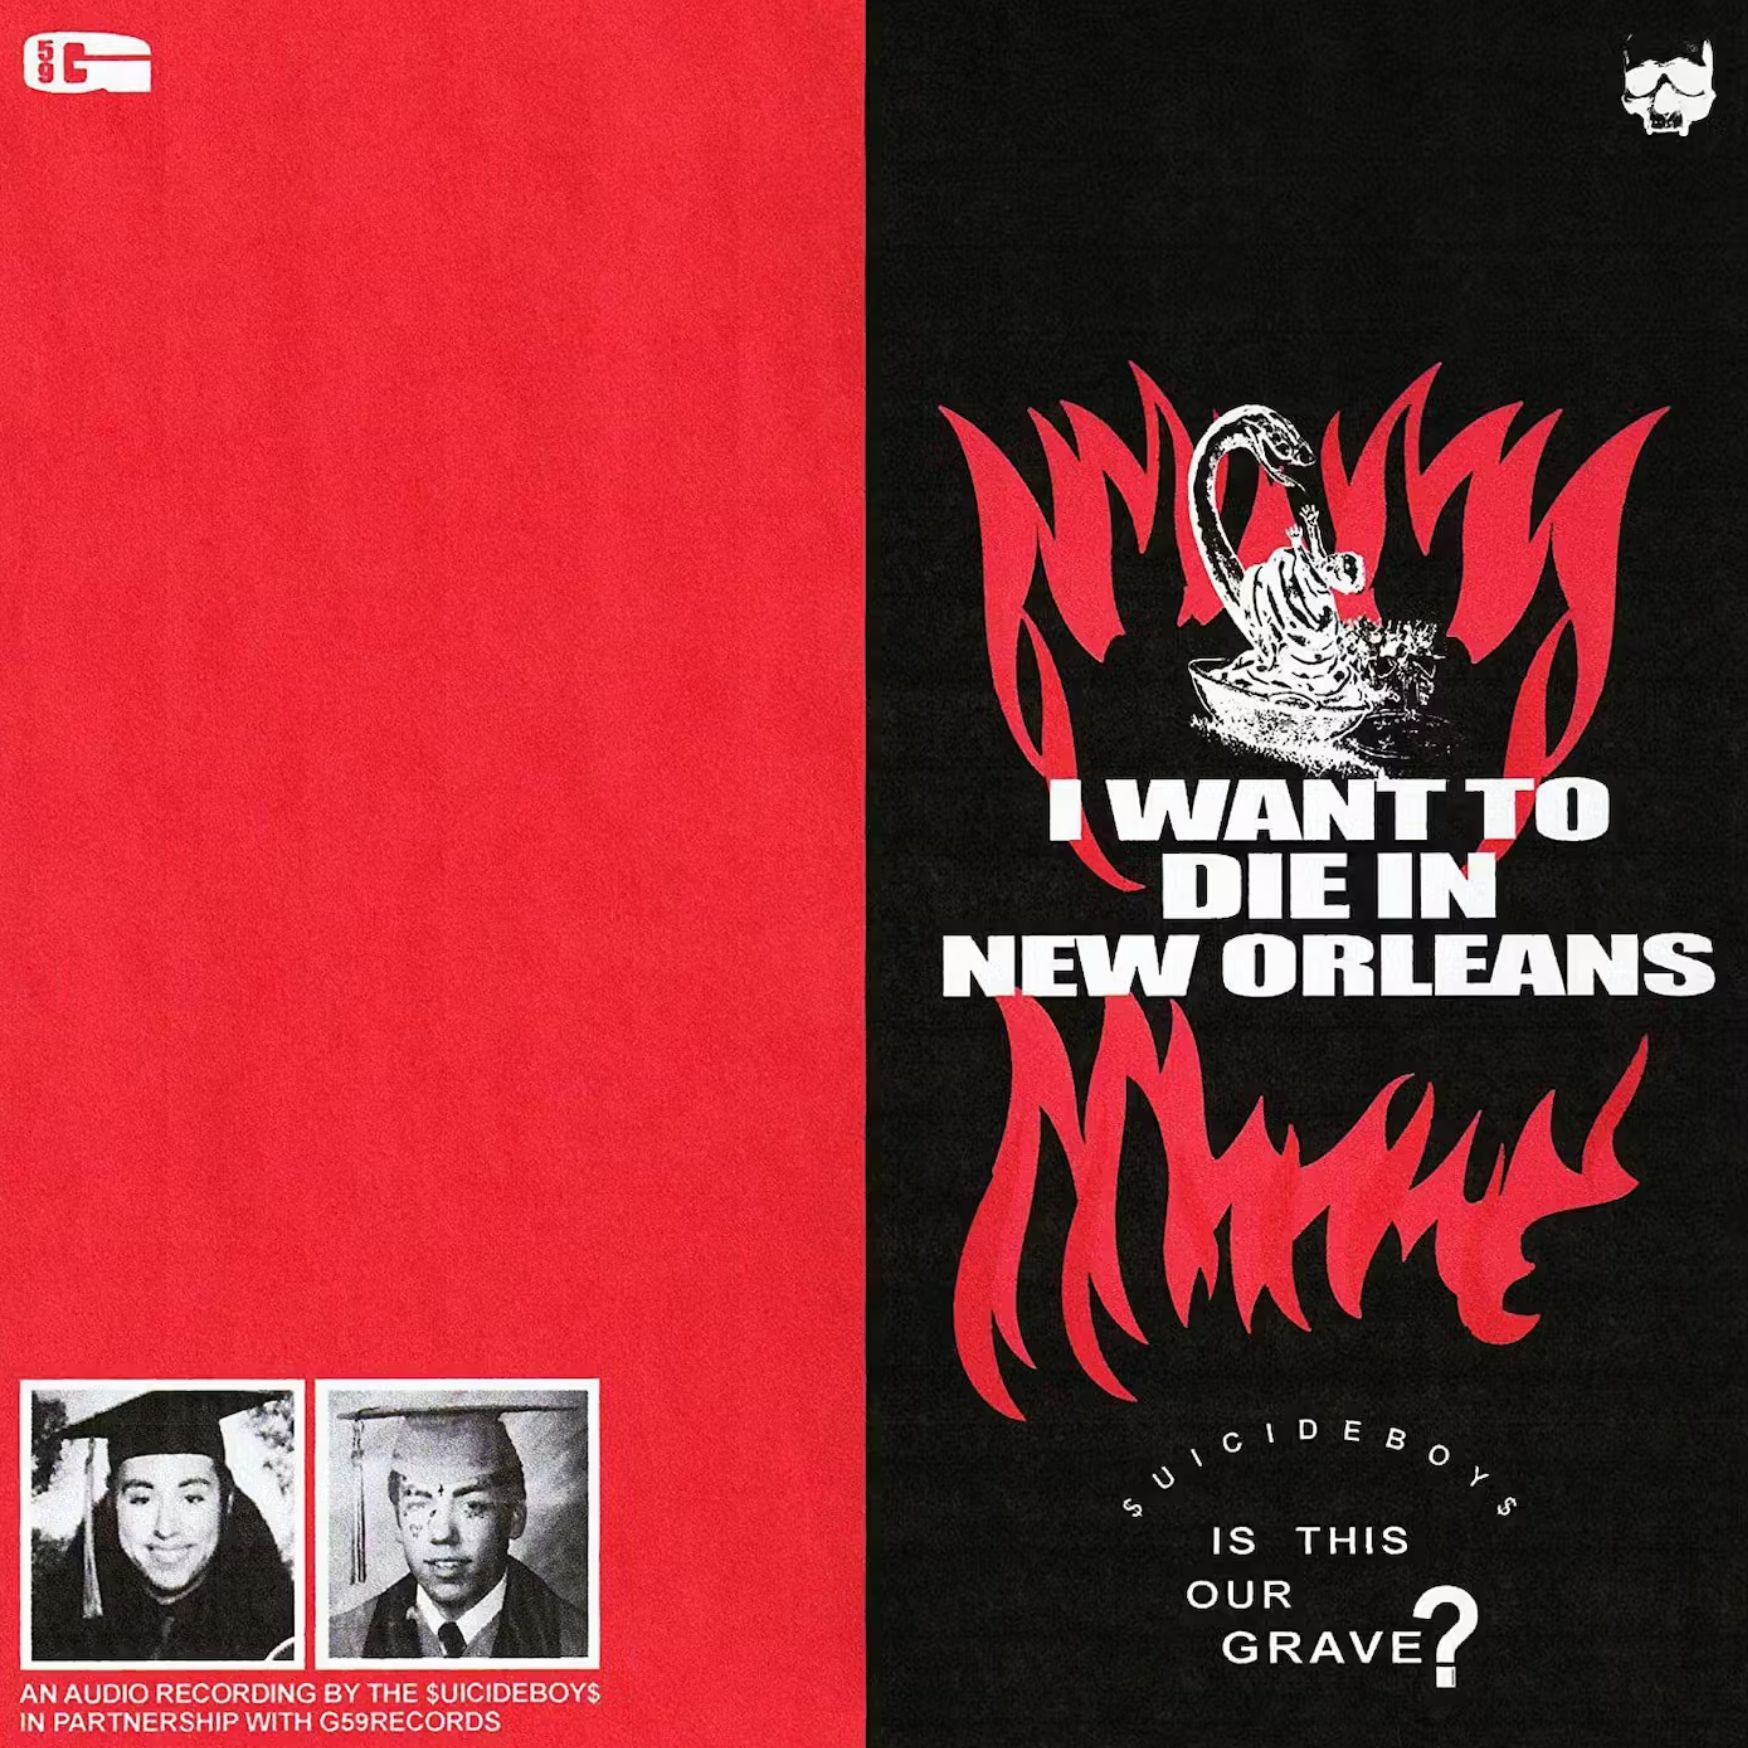 $Uicideboy$ - I Want To Die In New Orleans [Silver Vinyl]